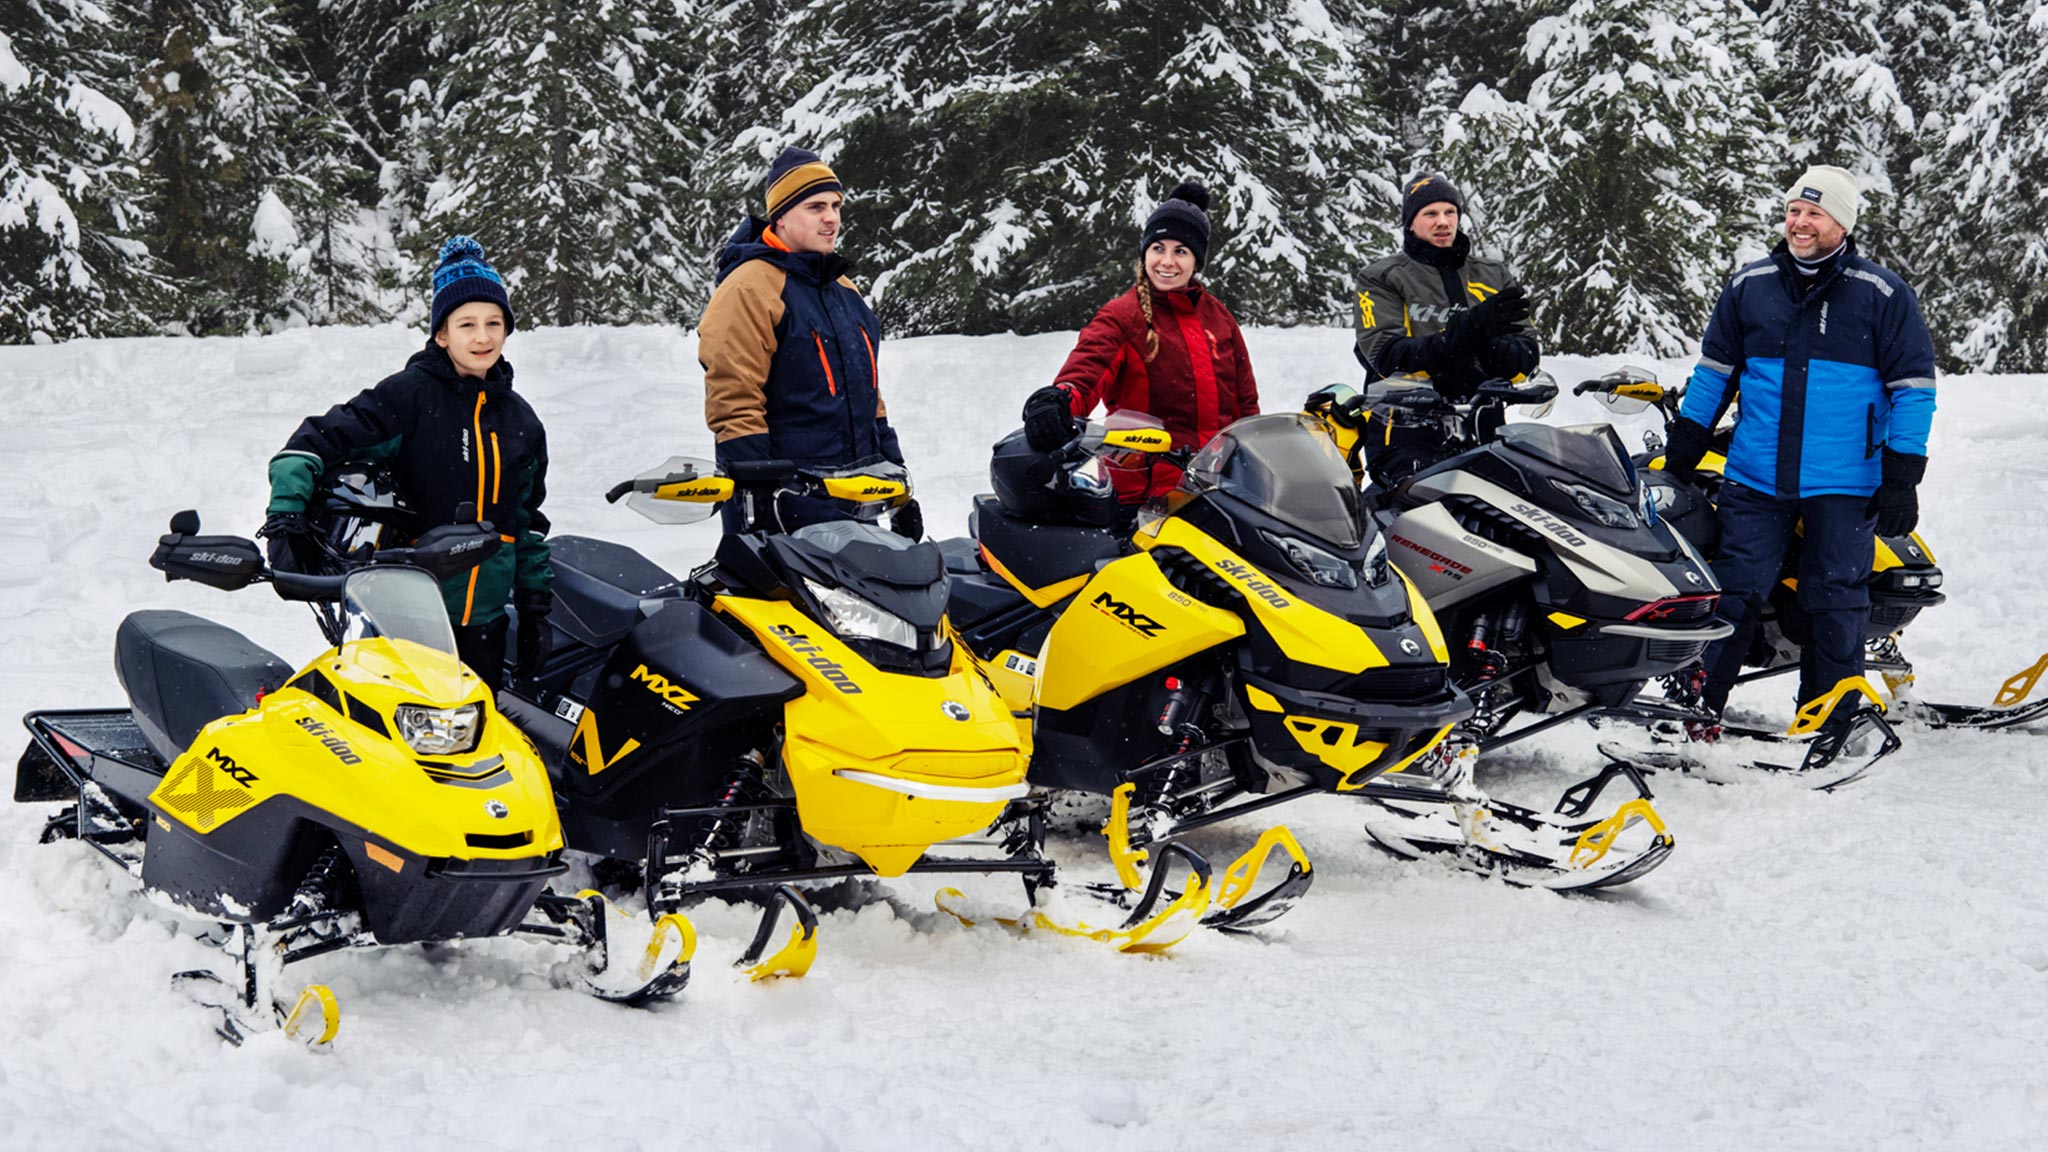 Group of friends next to their Ski-Doo snowmobile